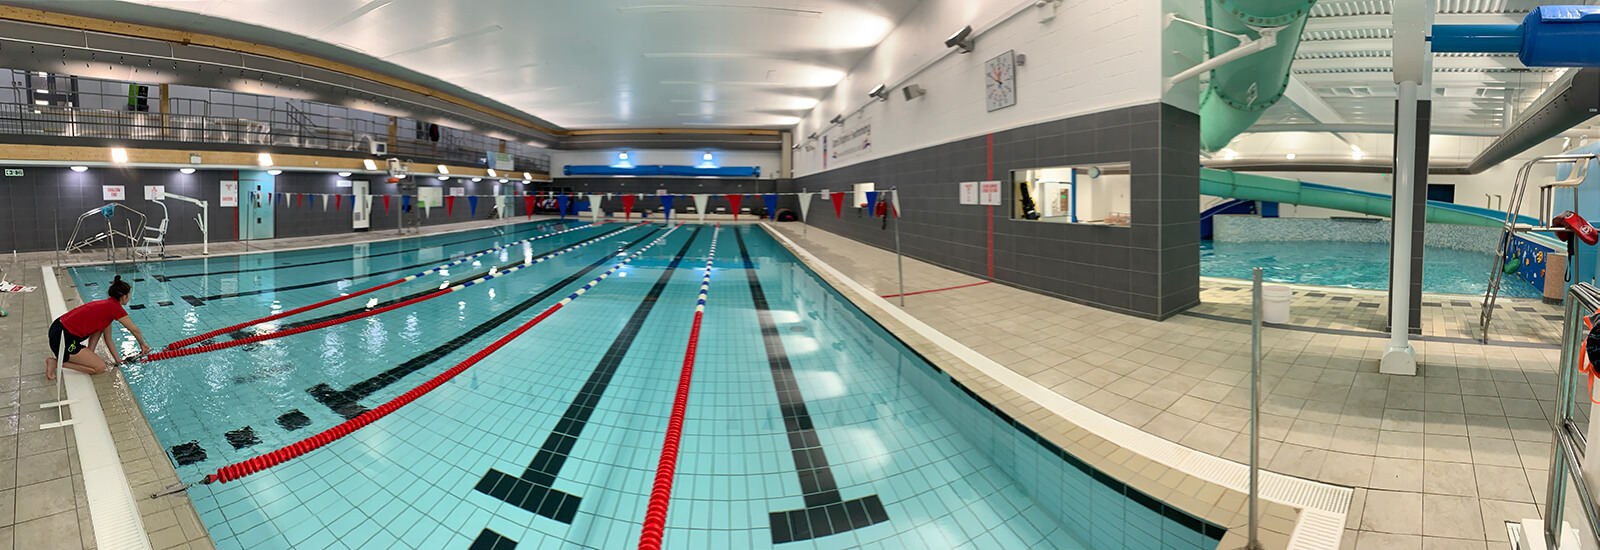 Bath Sports and Leisure Centre